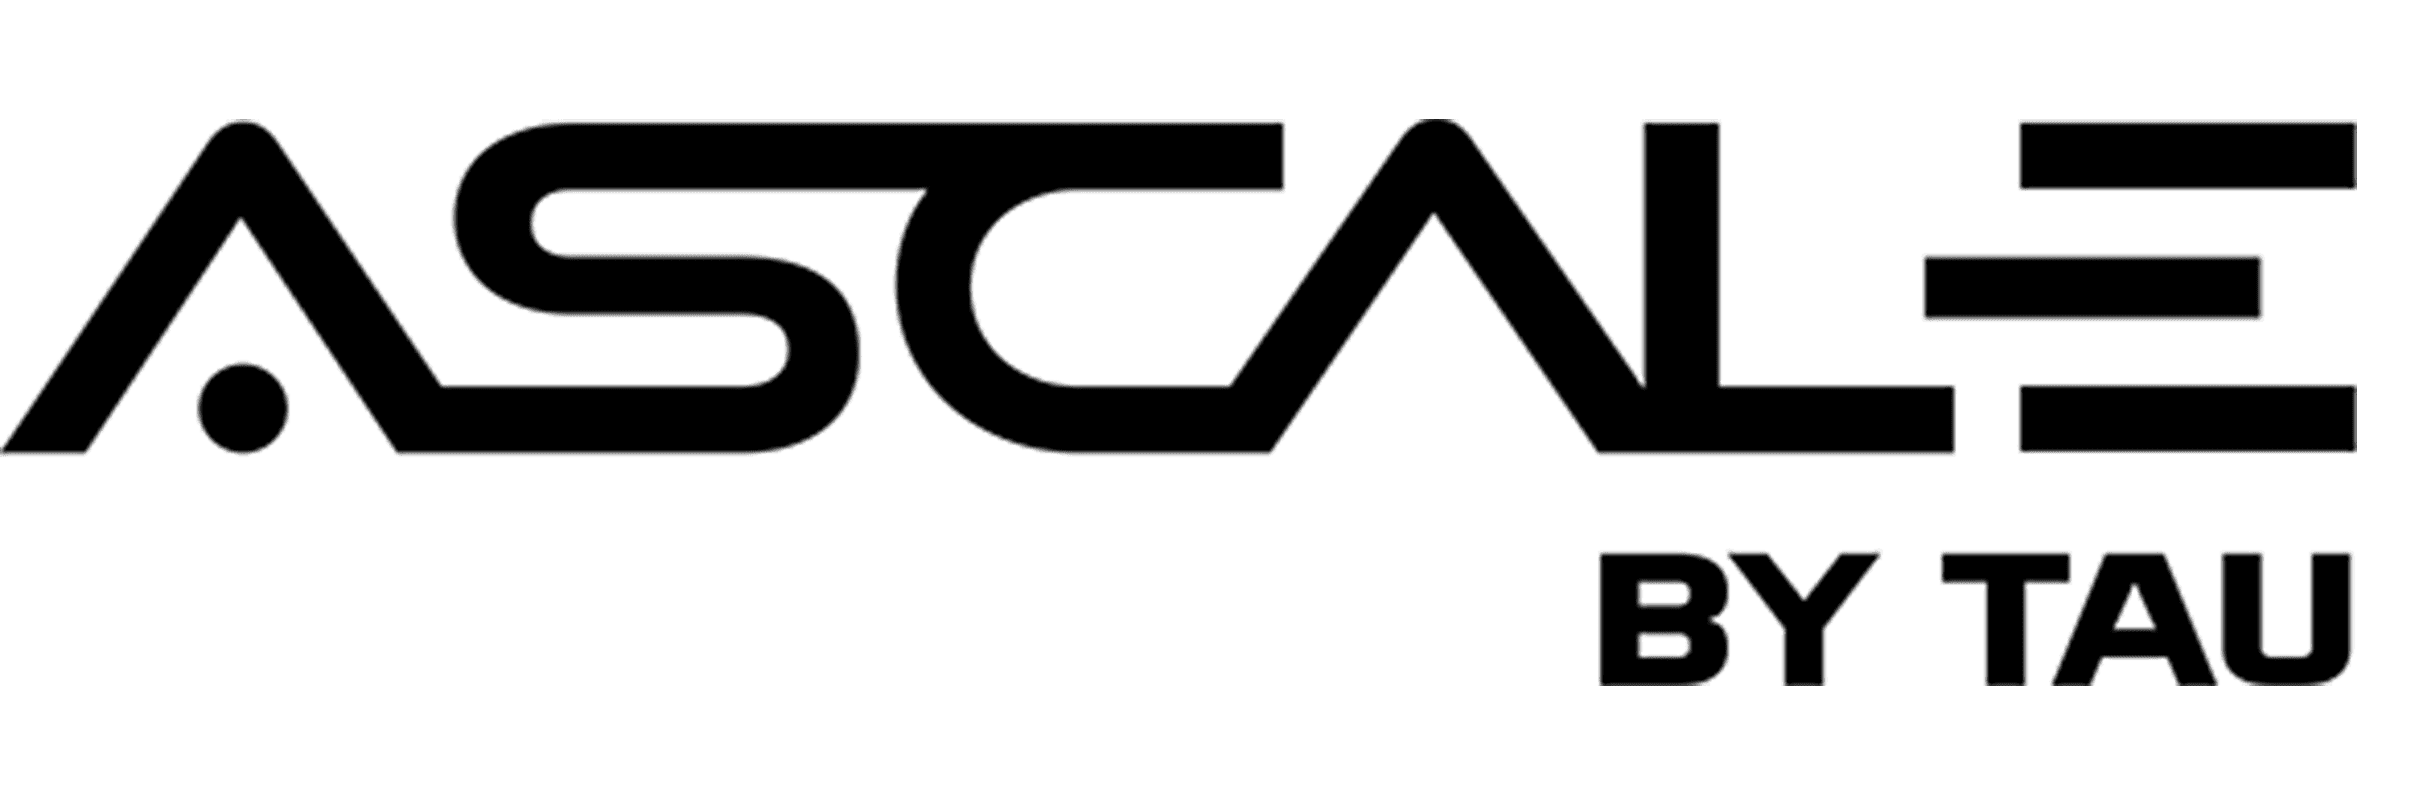 Ascale_logo-2(1)